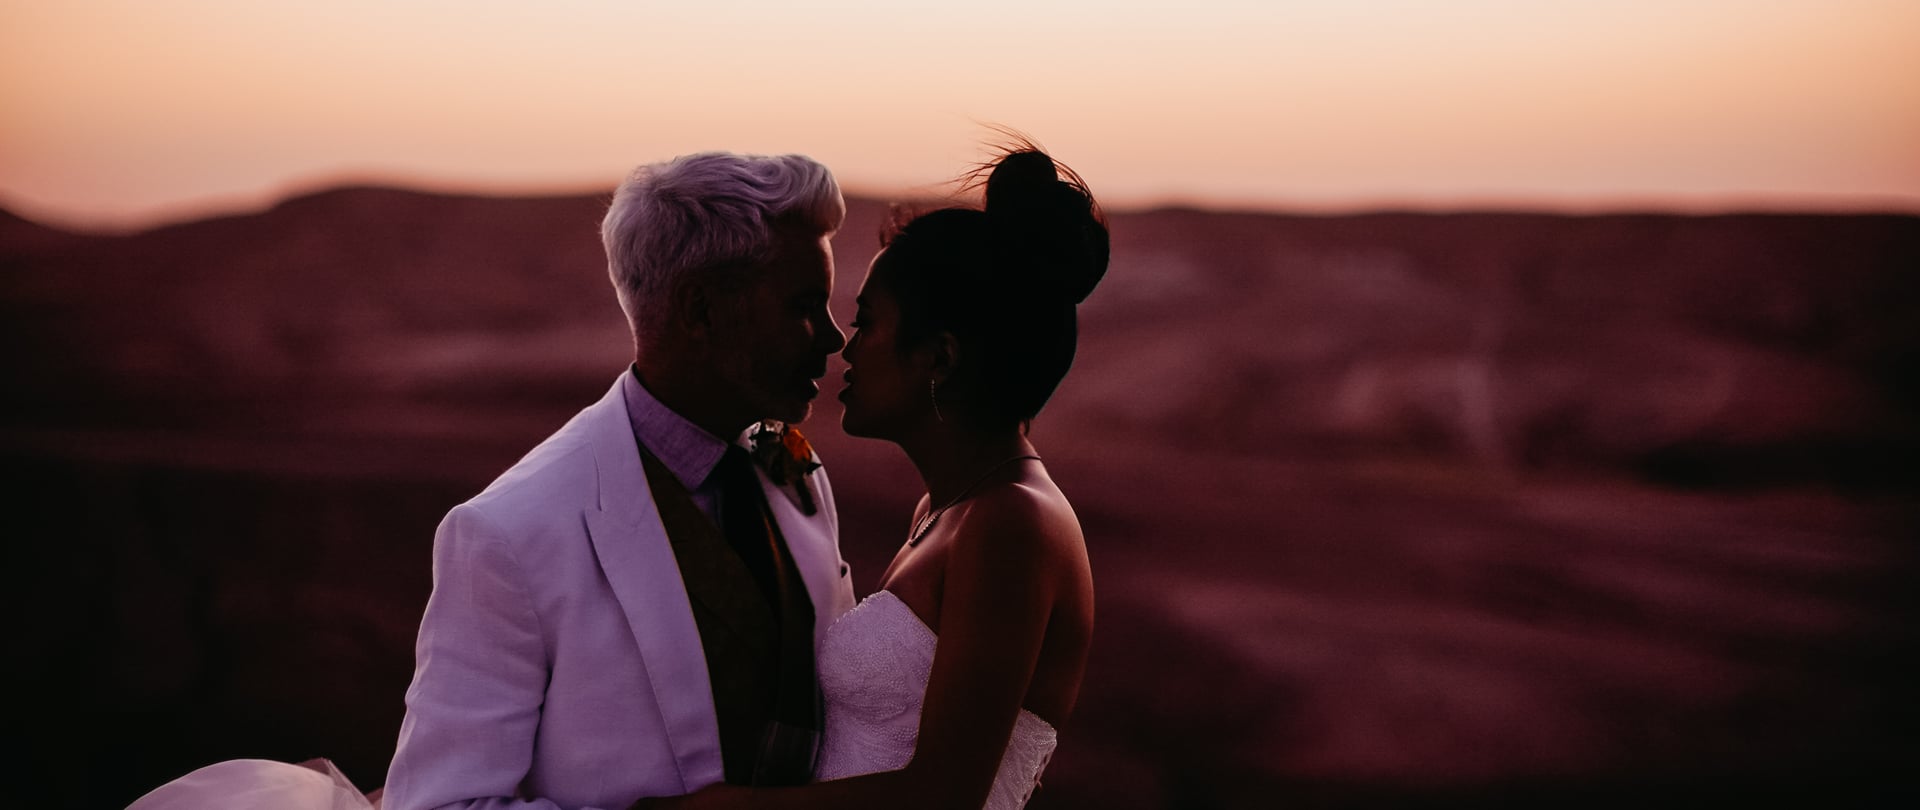 Linda & Steve Wedding Video Filmed at Morocco, Africa